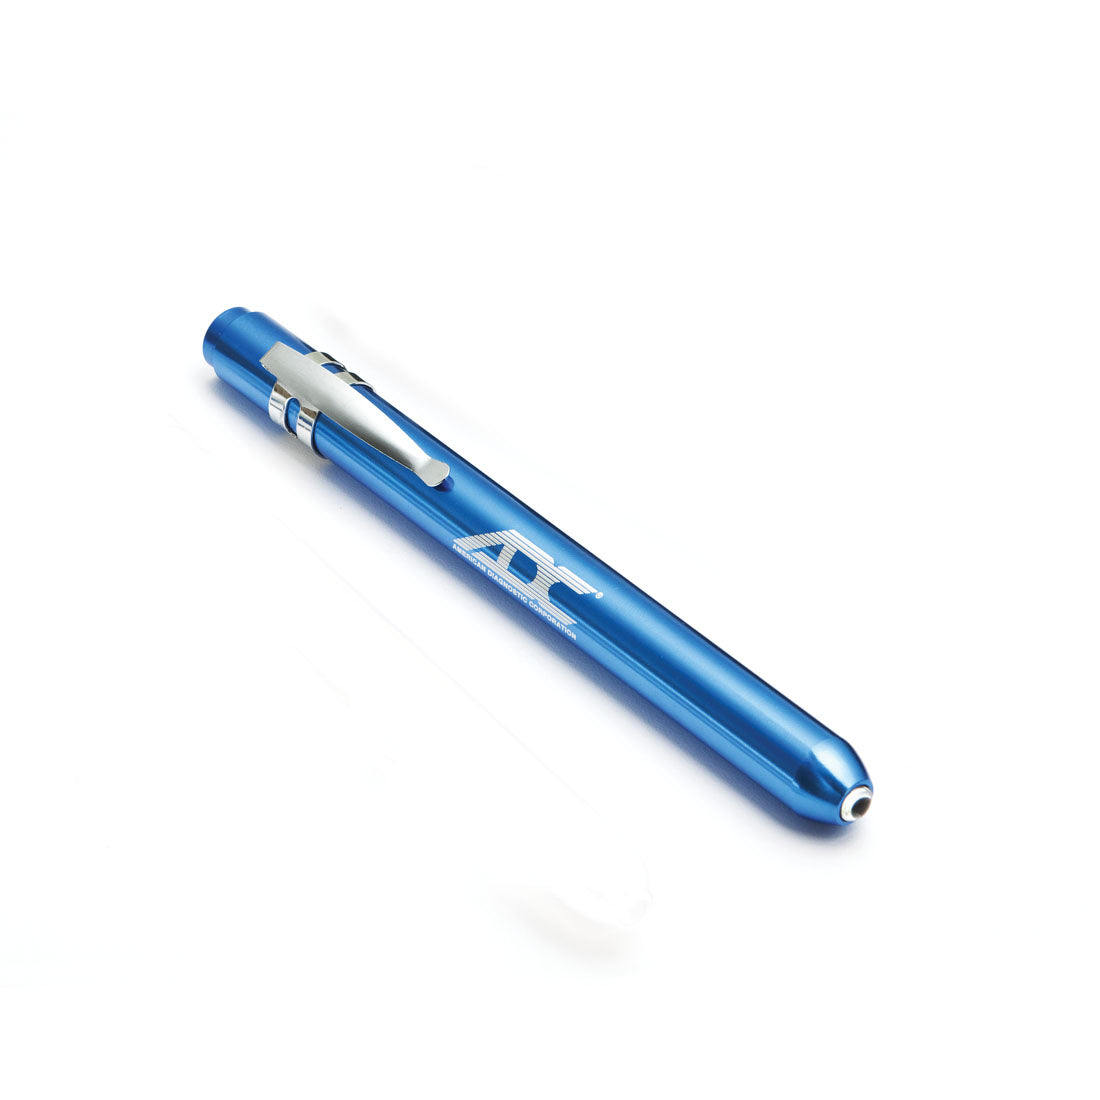 METALITE Reusable Pupil Gauge Penlight Pen Light ADC Royal  